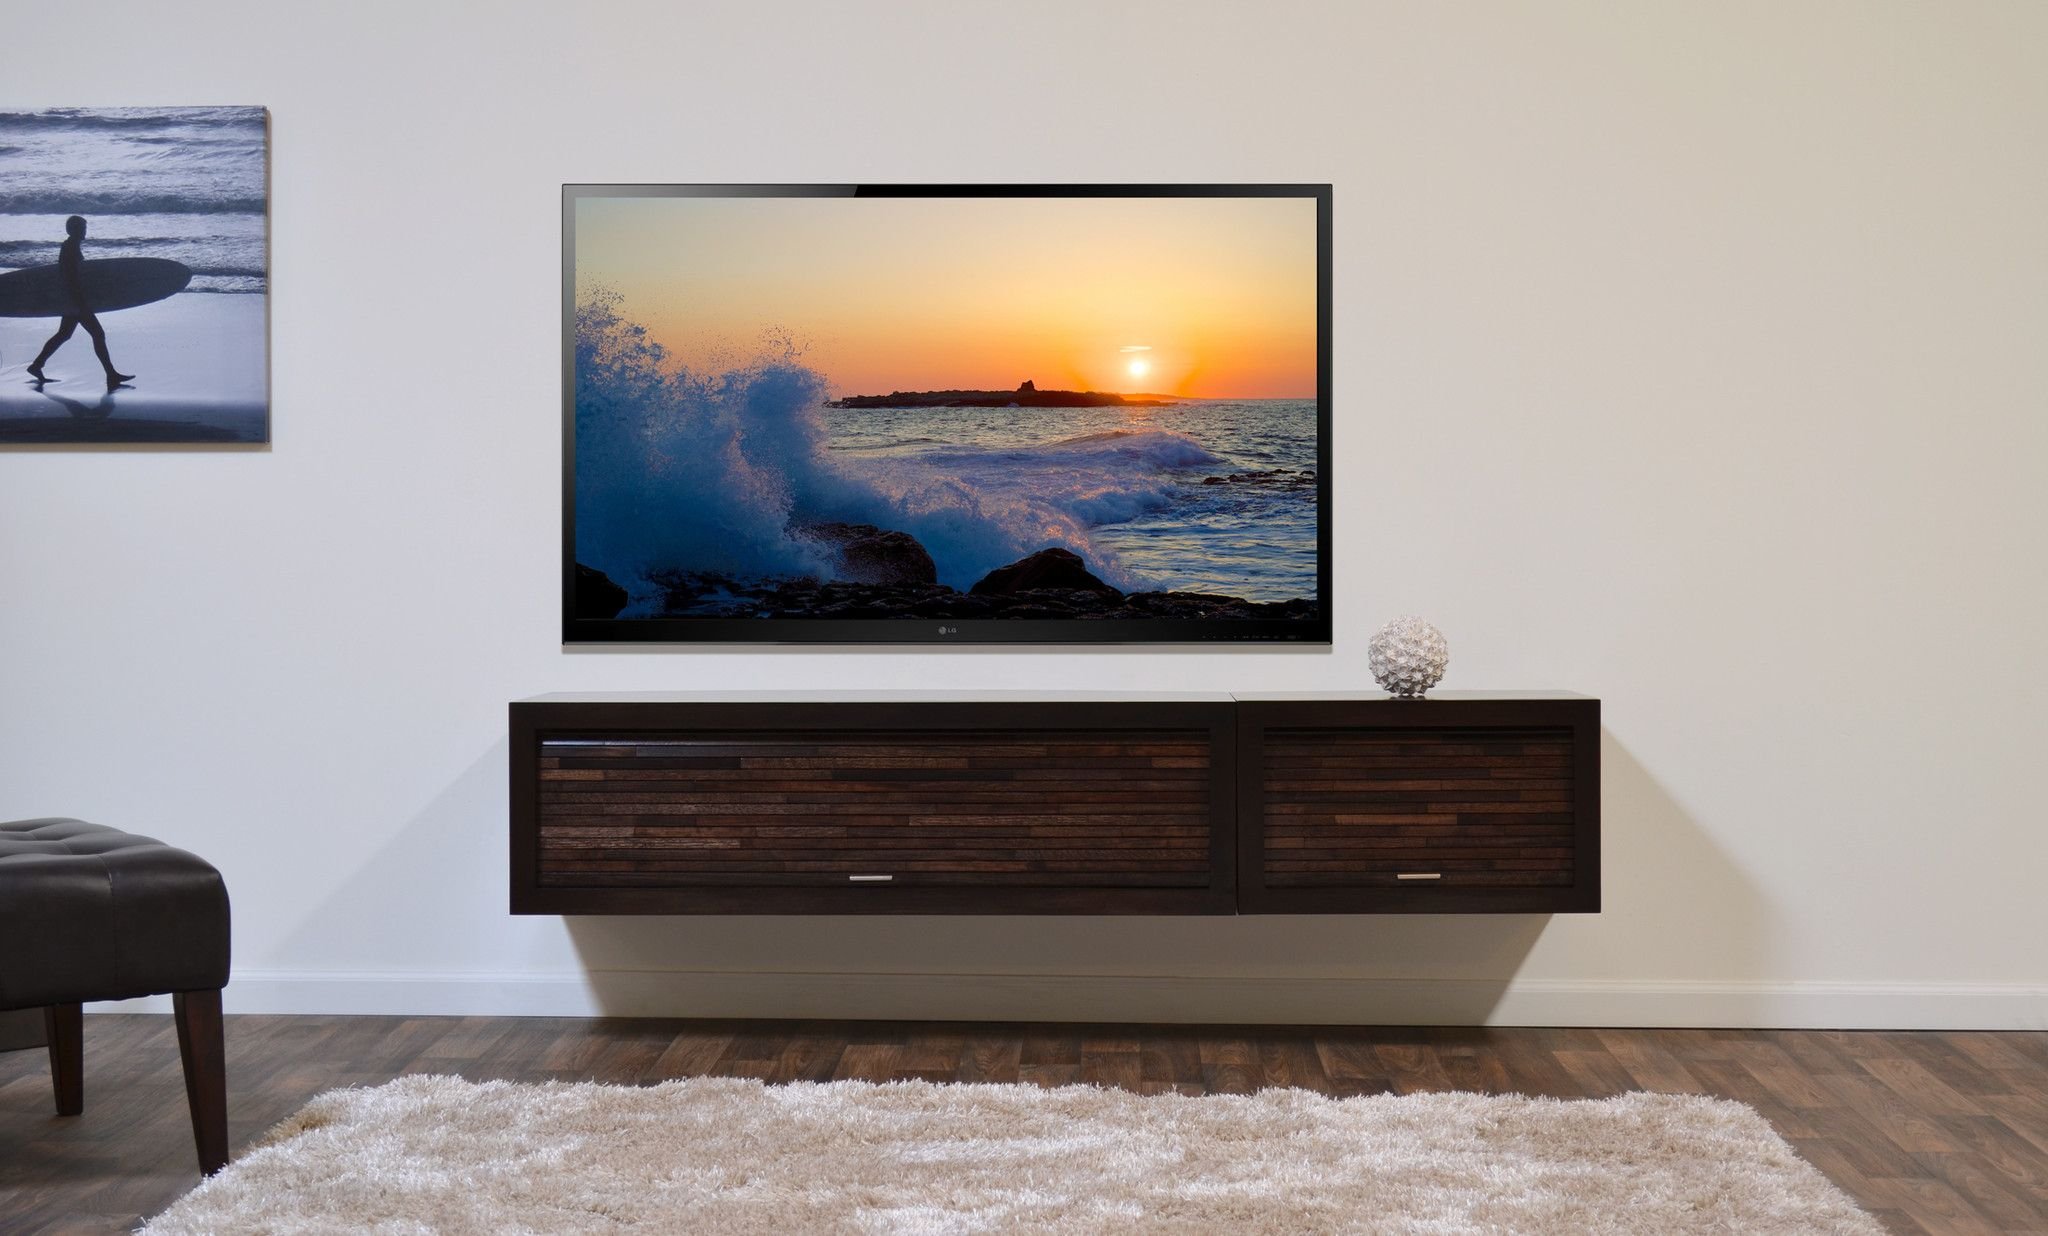 New tv set. Toshiba 55 дюймов саундбар. Телевизор на стене. Телевизор настенный. Плоский телевизор на стену.